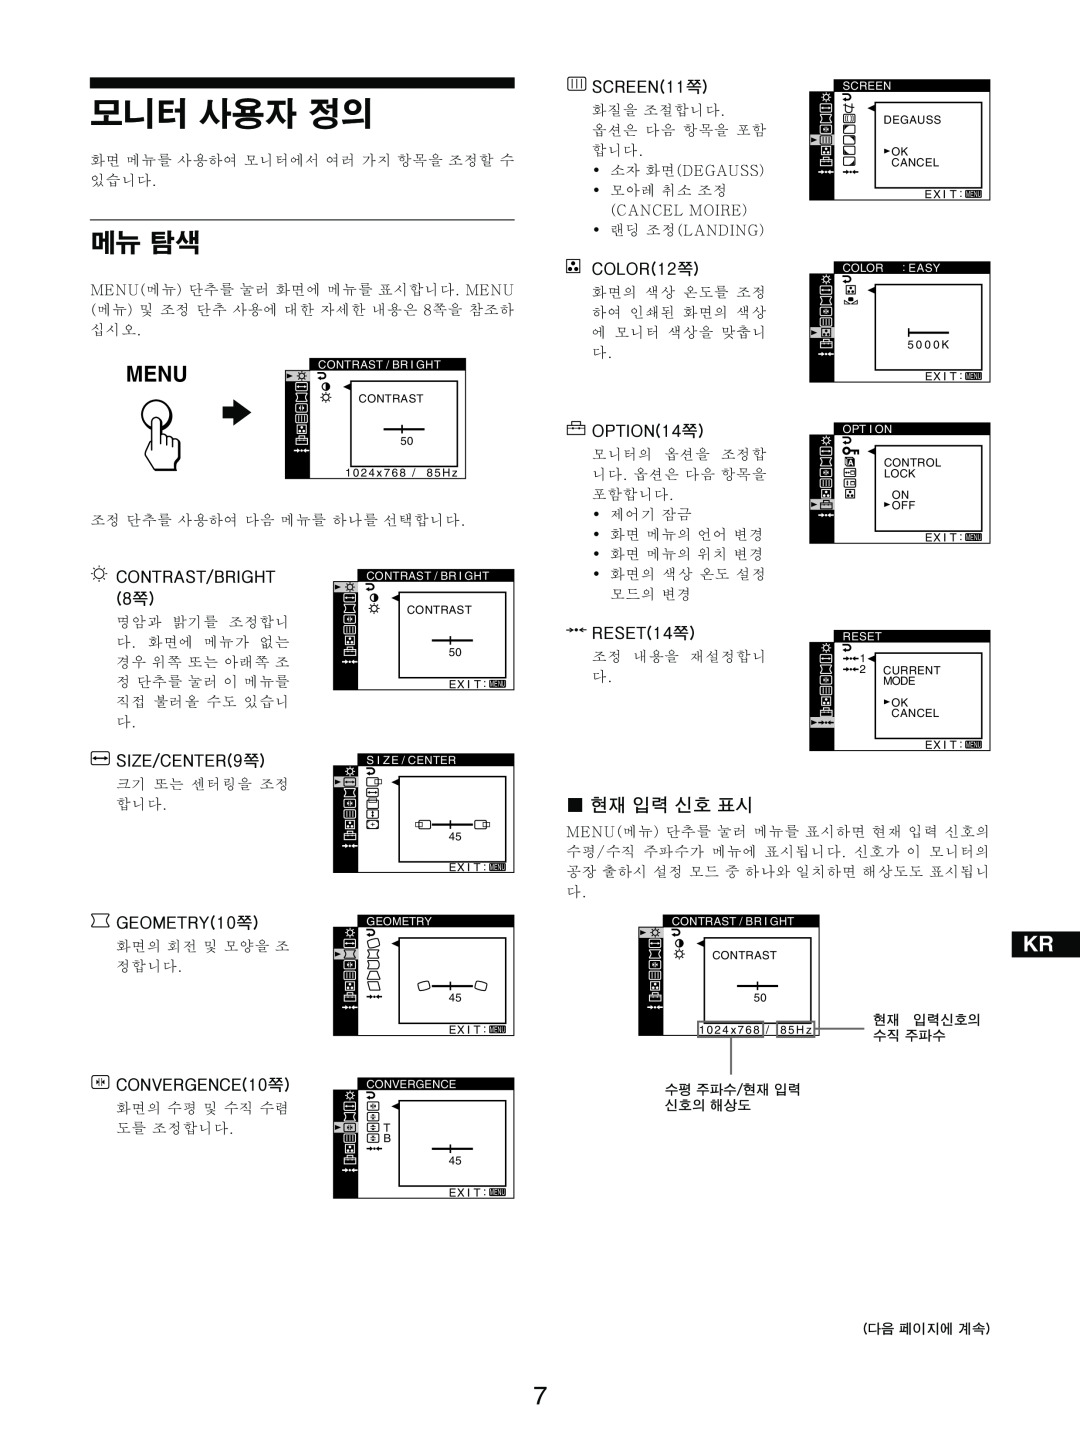 Sony GDM-5510 operating instructions Menu, ==== 